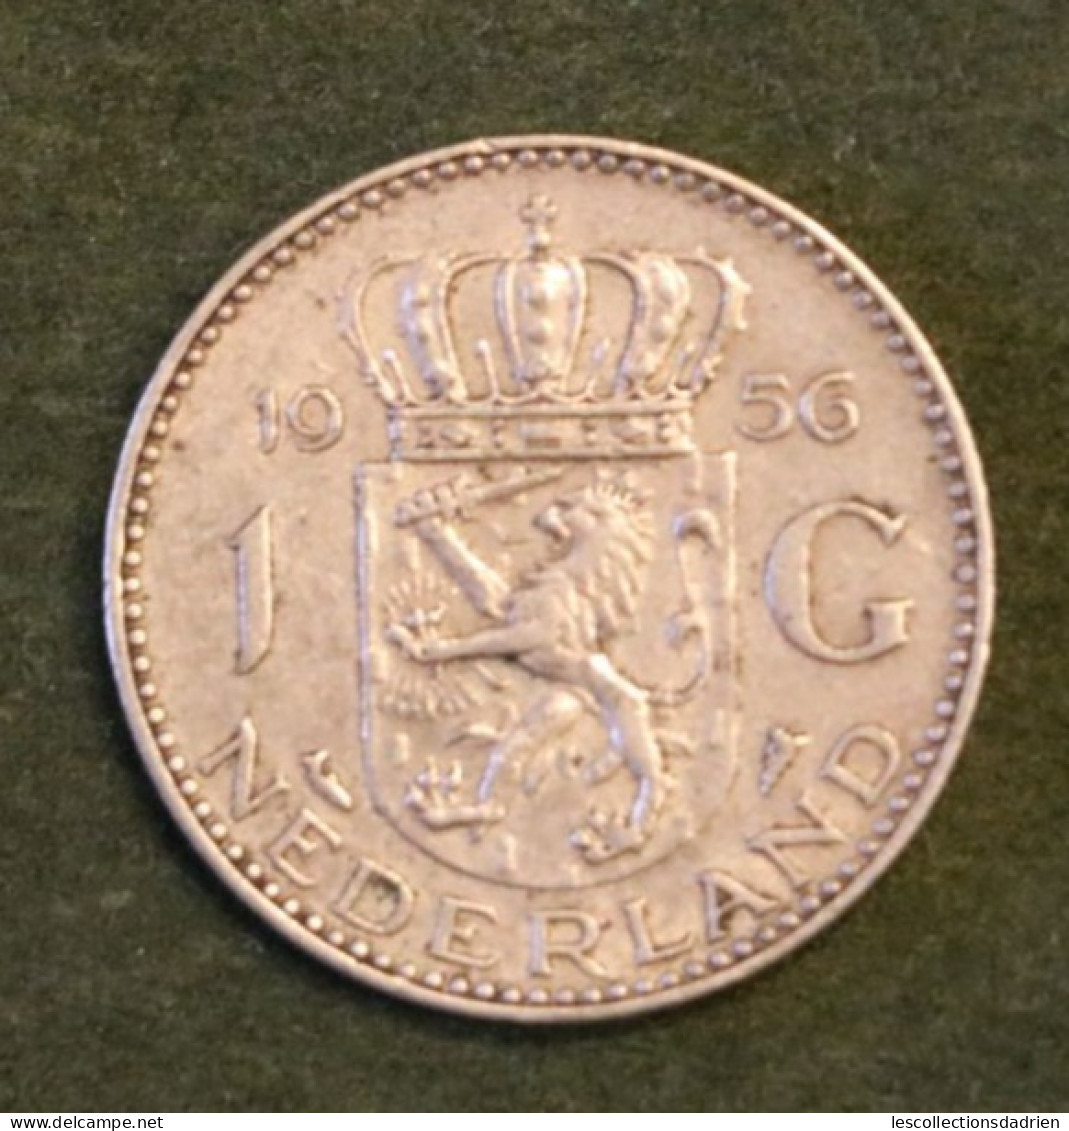 Pièce En Argent Des Pays-Bas 1 Gulden 1956  - Dutch Silver Coin/2 - 1948-1980: Juliana